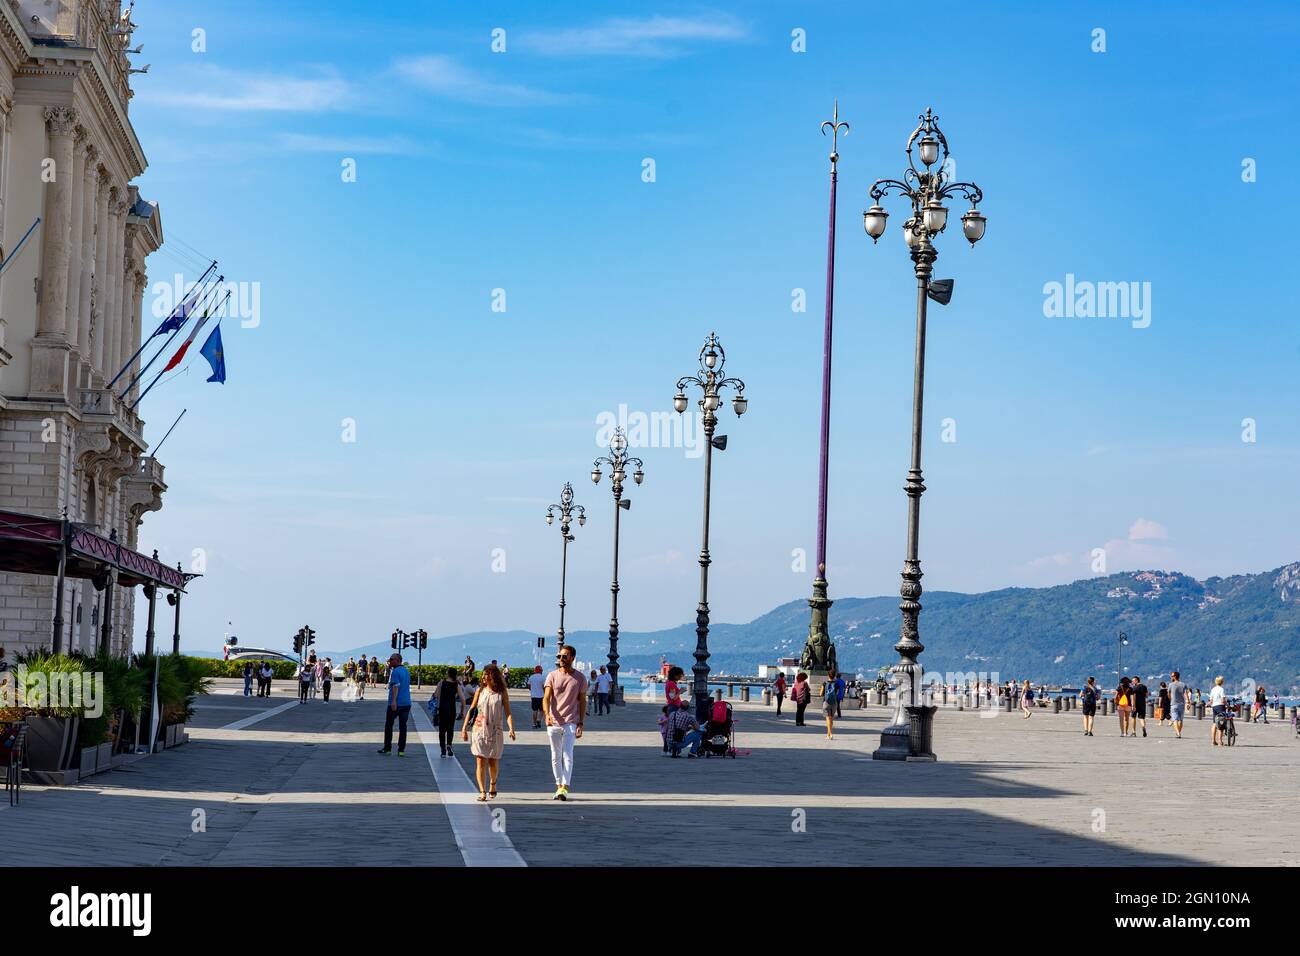 11.08.2021: Trieste, Italy: Plaza Unidad de Italia with people walking around Stock Photo